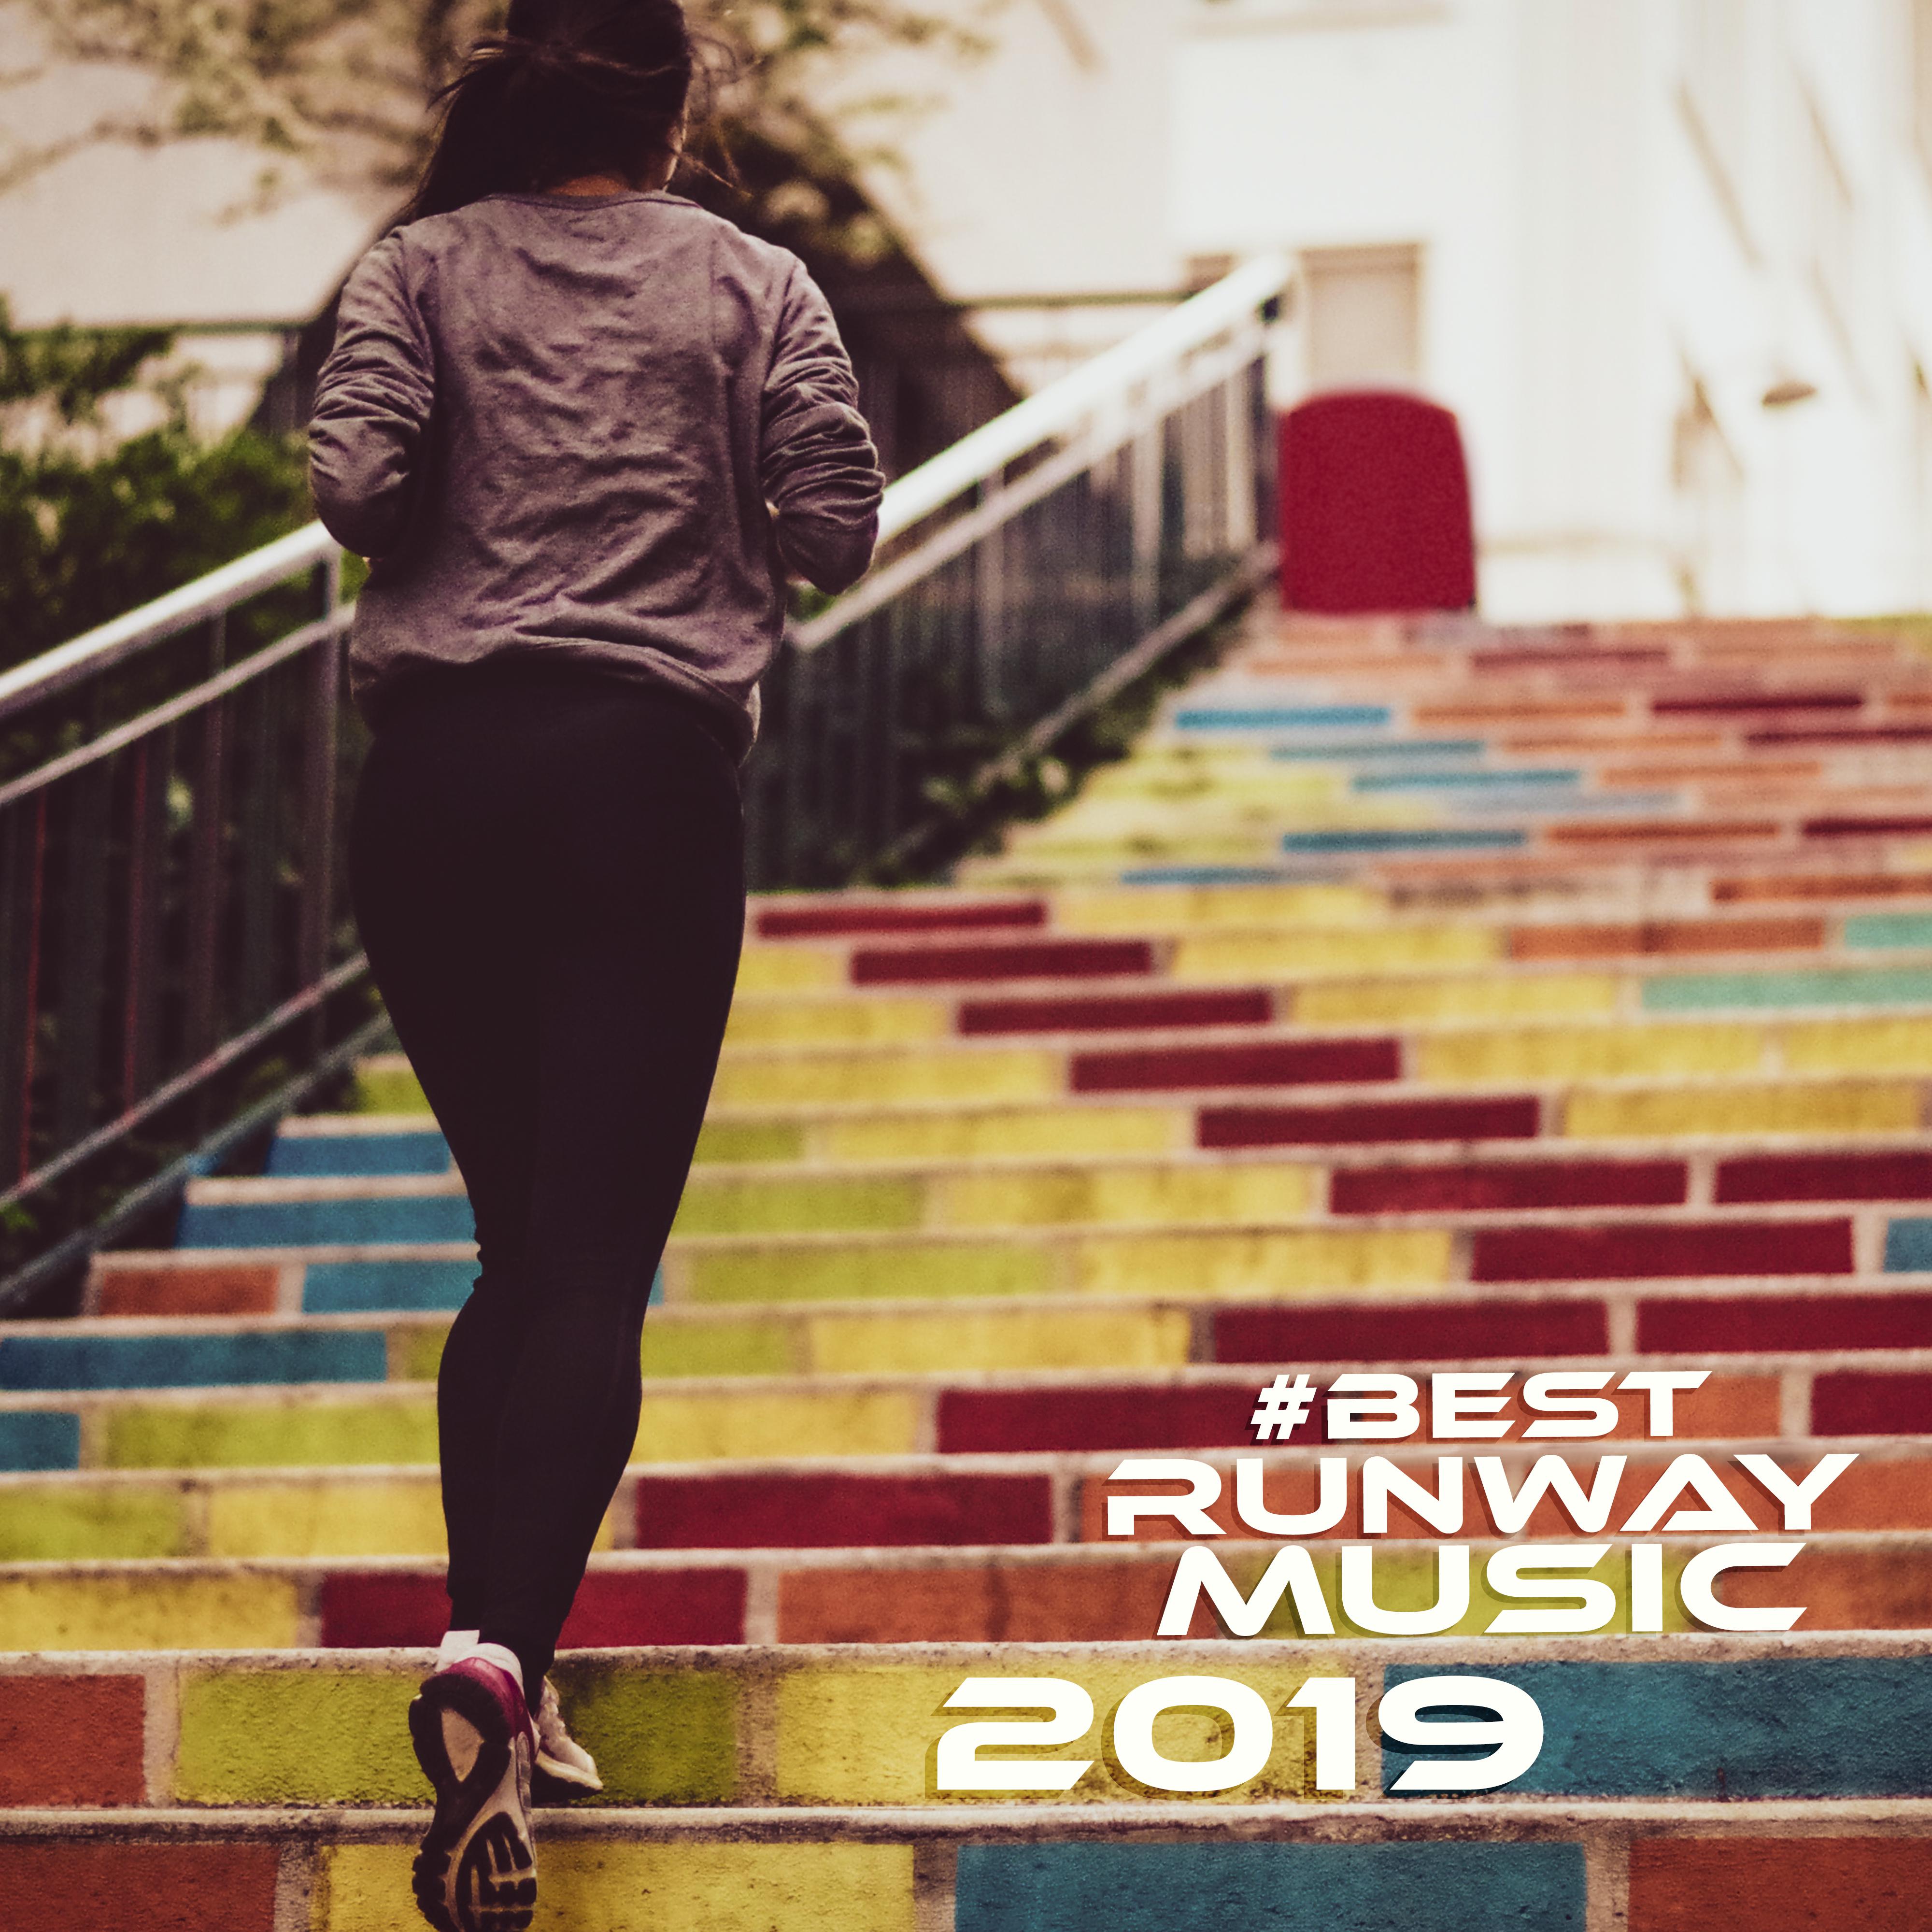 #Best Runway Music 2019